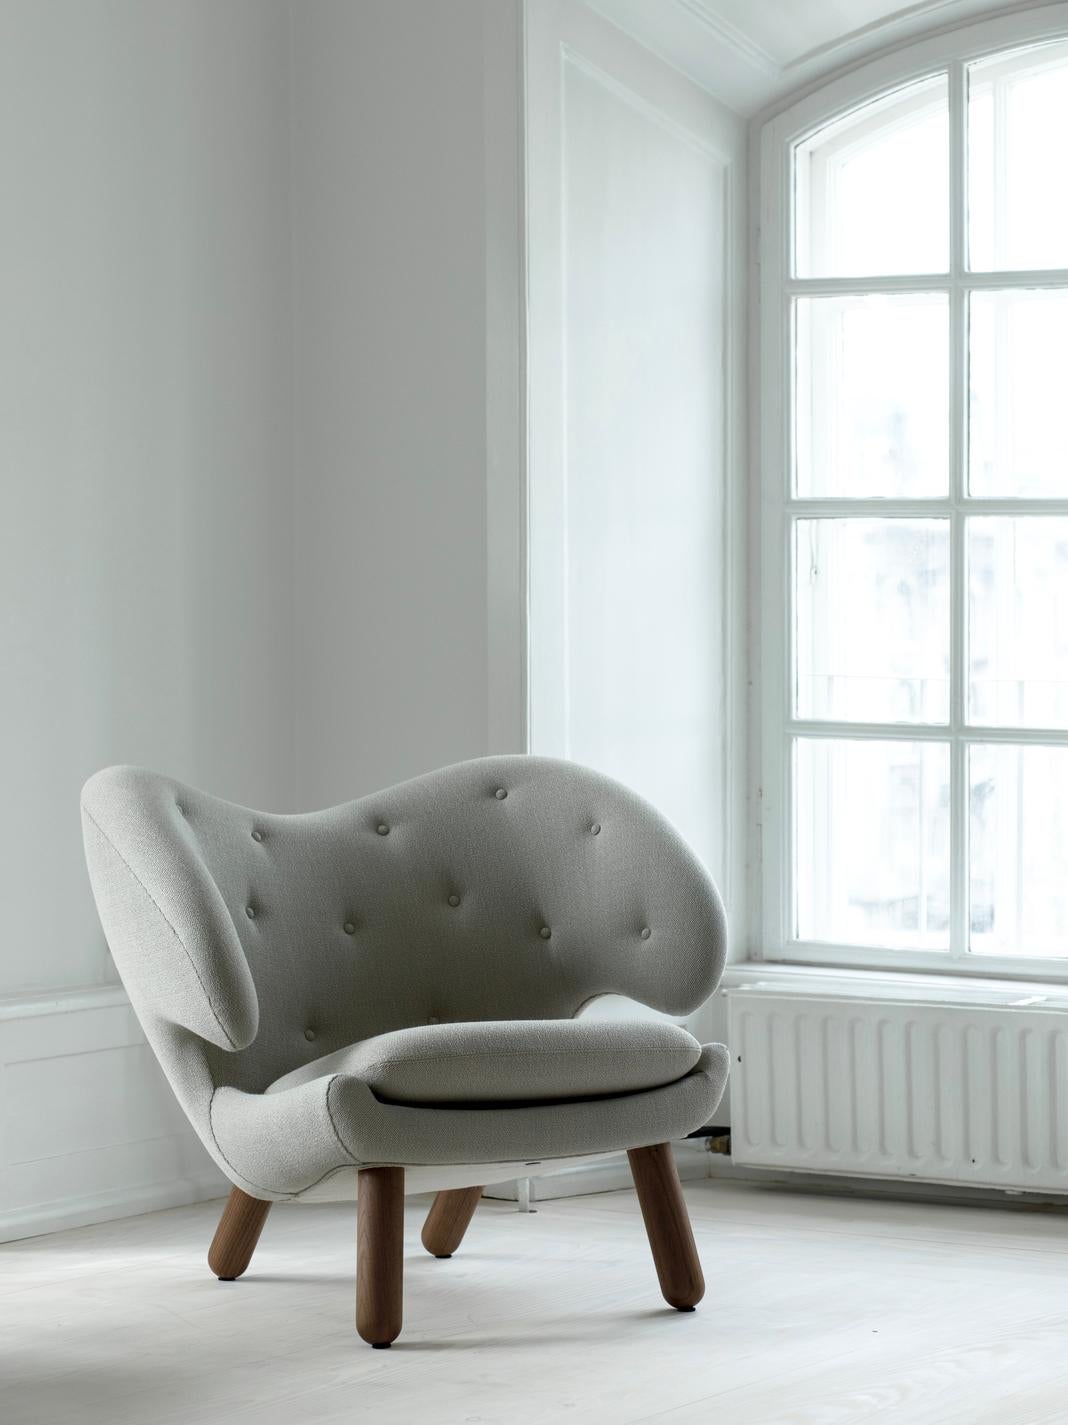 Wood Finn Juhl Pelican Chair Upholstered in Fabric